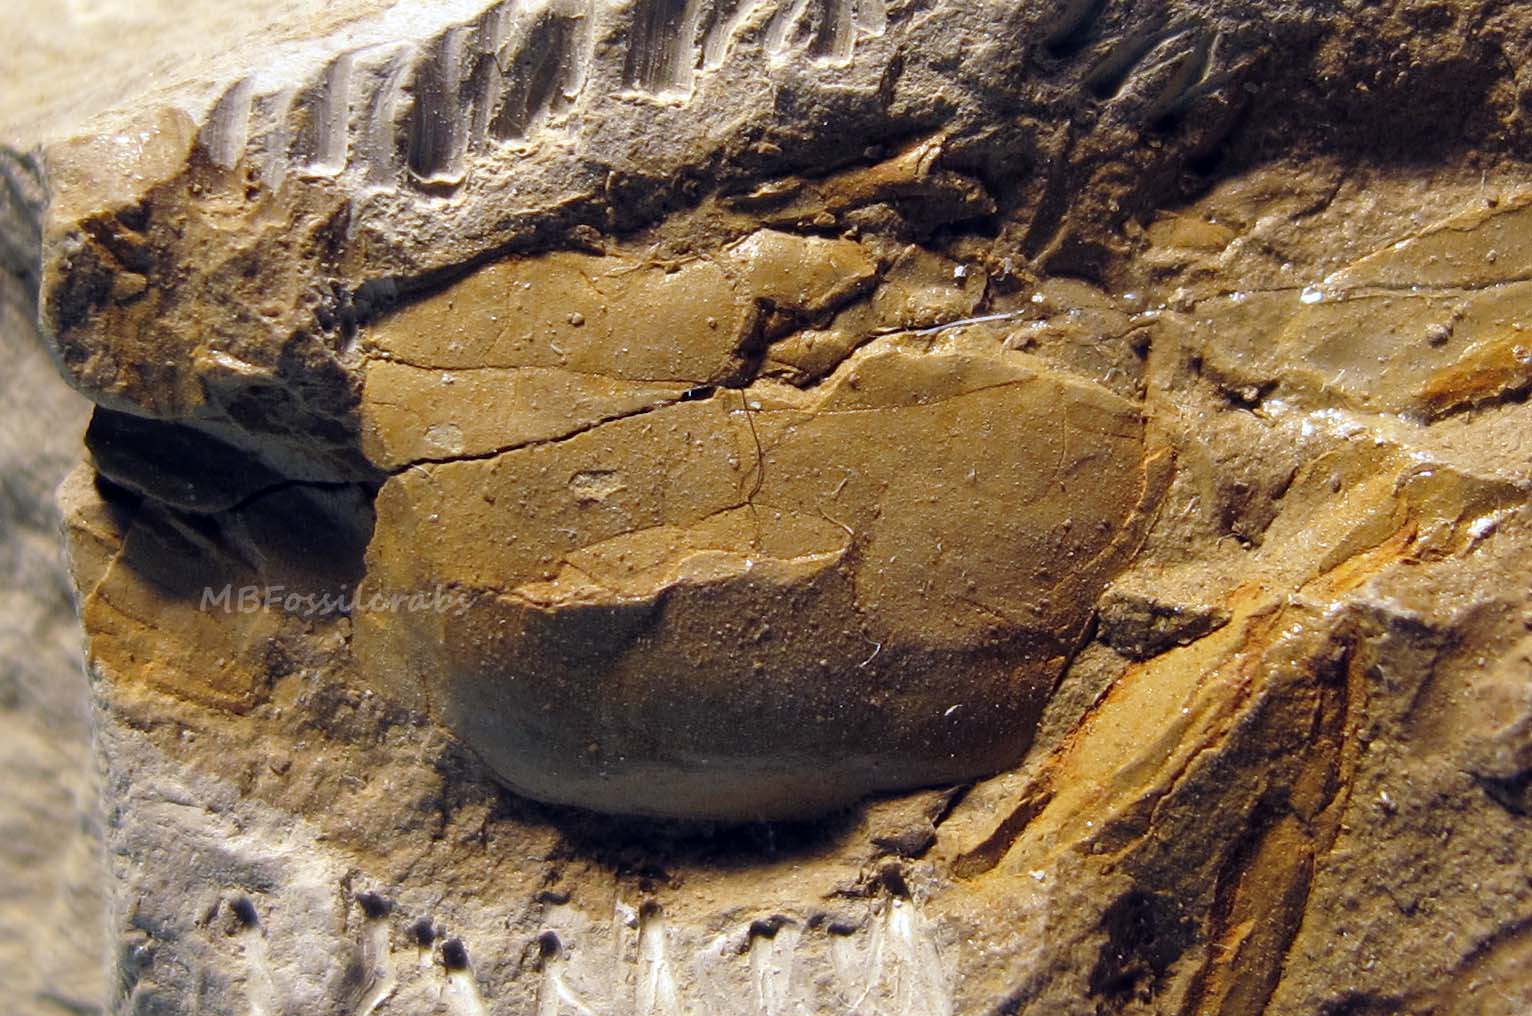 Afruca miocenica photo